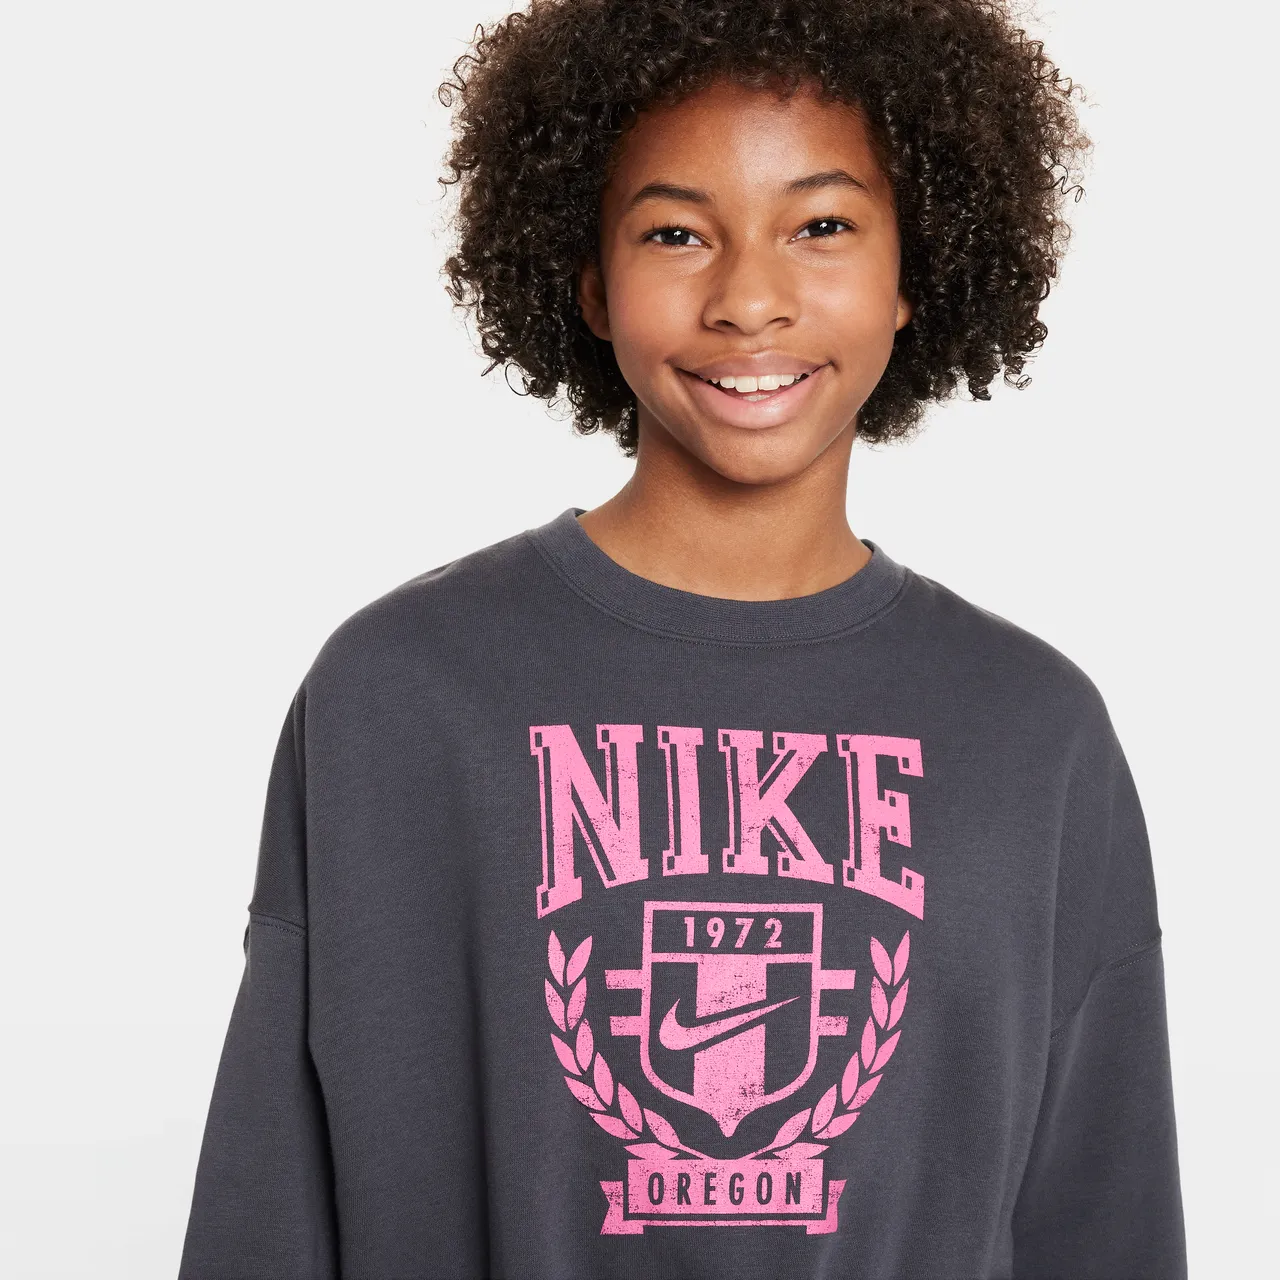 Nike Sportswear Older Kids' (Girls') Oversized Fleece Crew-Neck Sweatshirt - Grey - Polyester